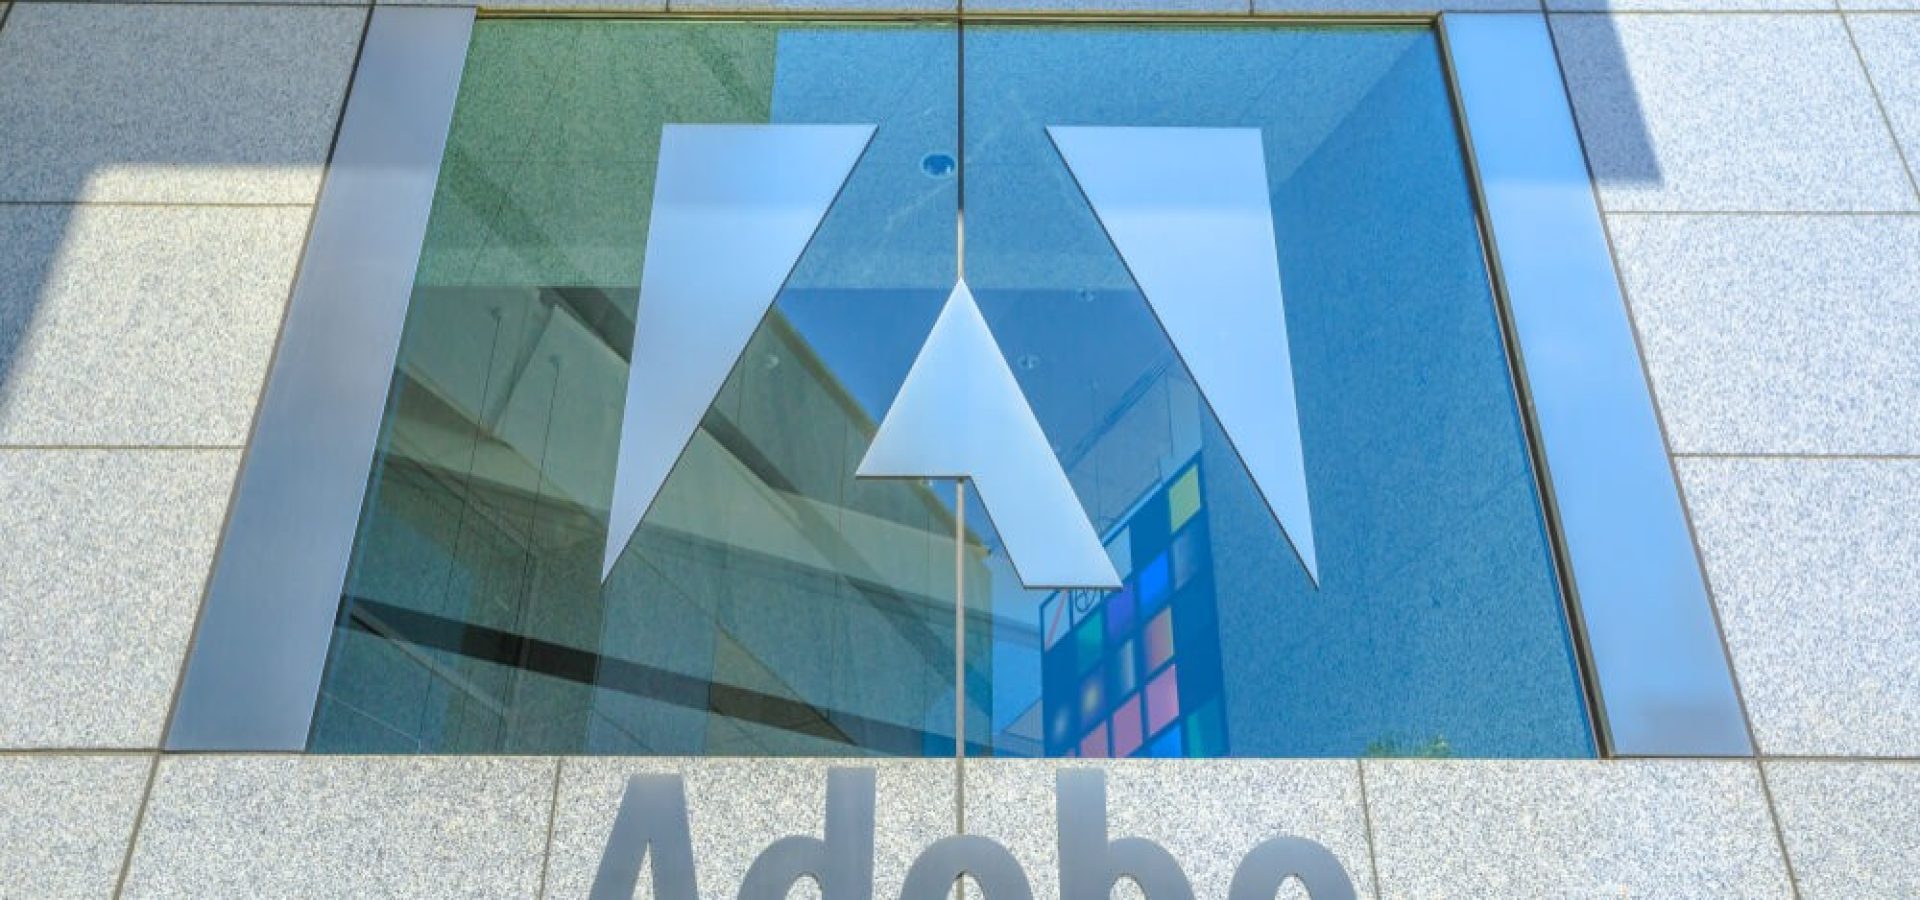 Adobe palace window with logo.